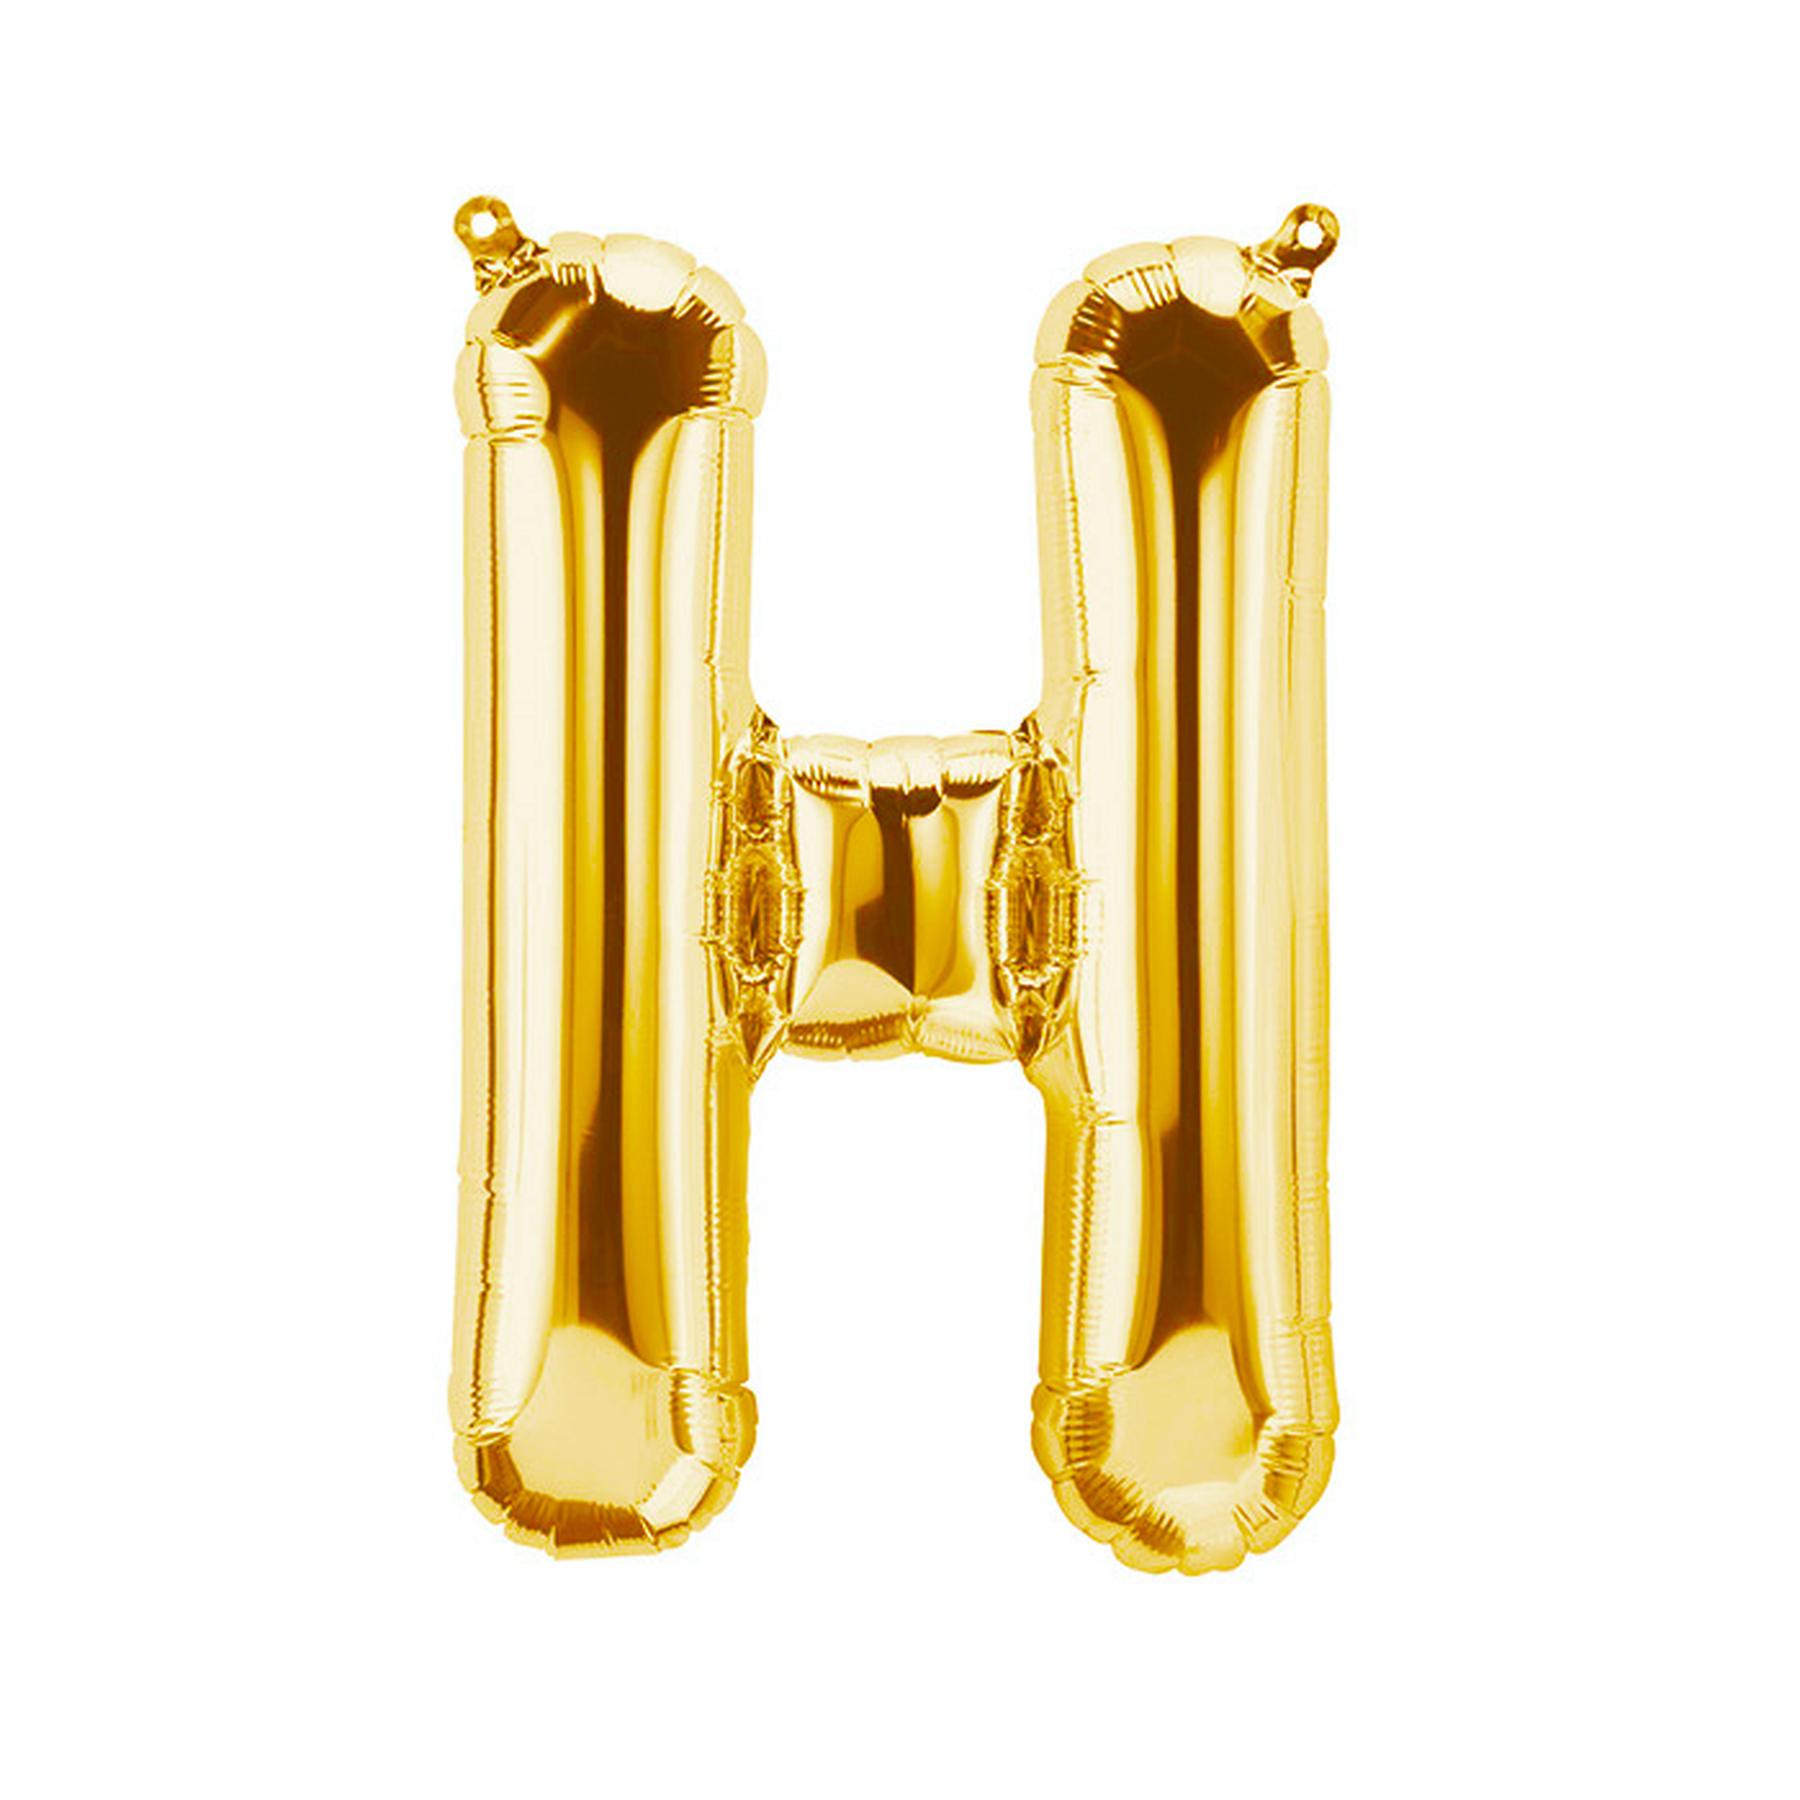 Folienballon Buchstabe H, gold, ca. 40 cm, für Luftbefüllung